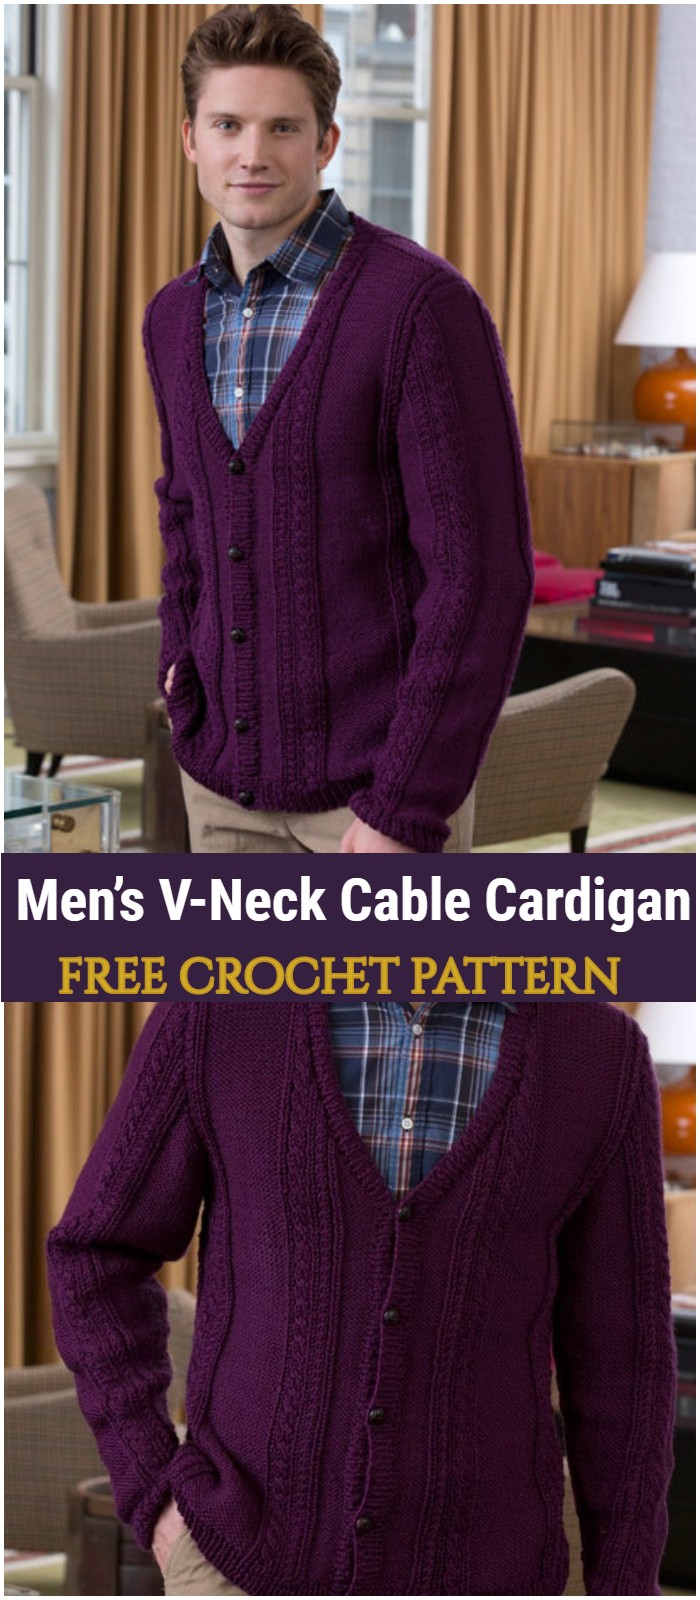 Crochet Men’s V-Neck Cable Cardigan